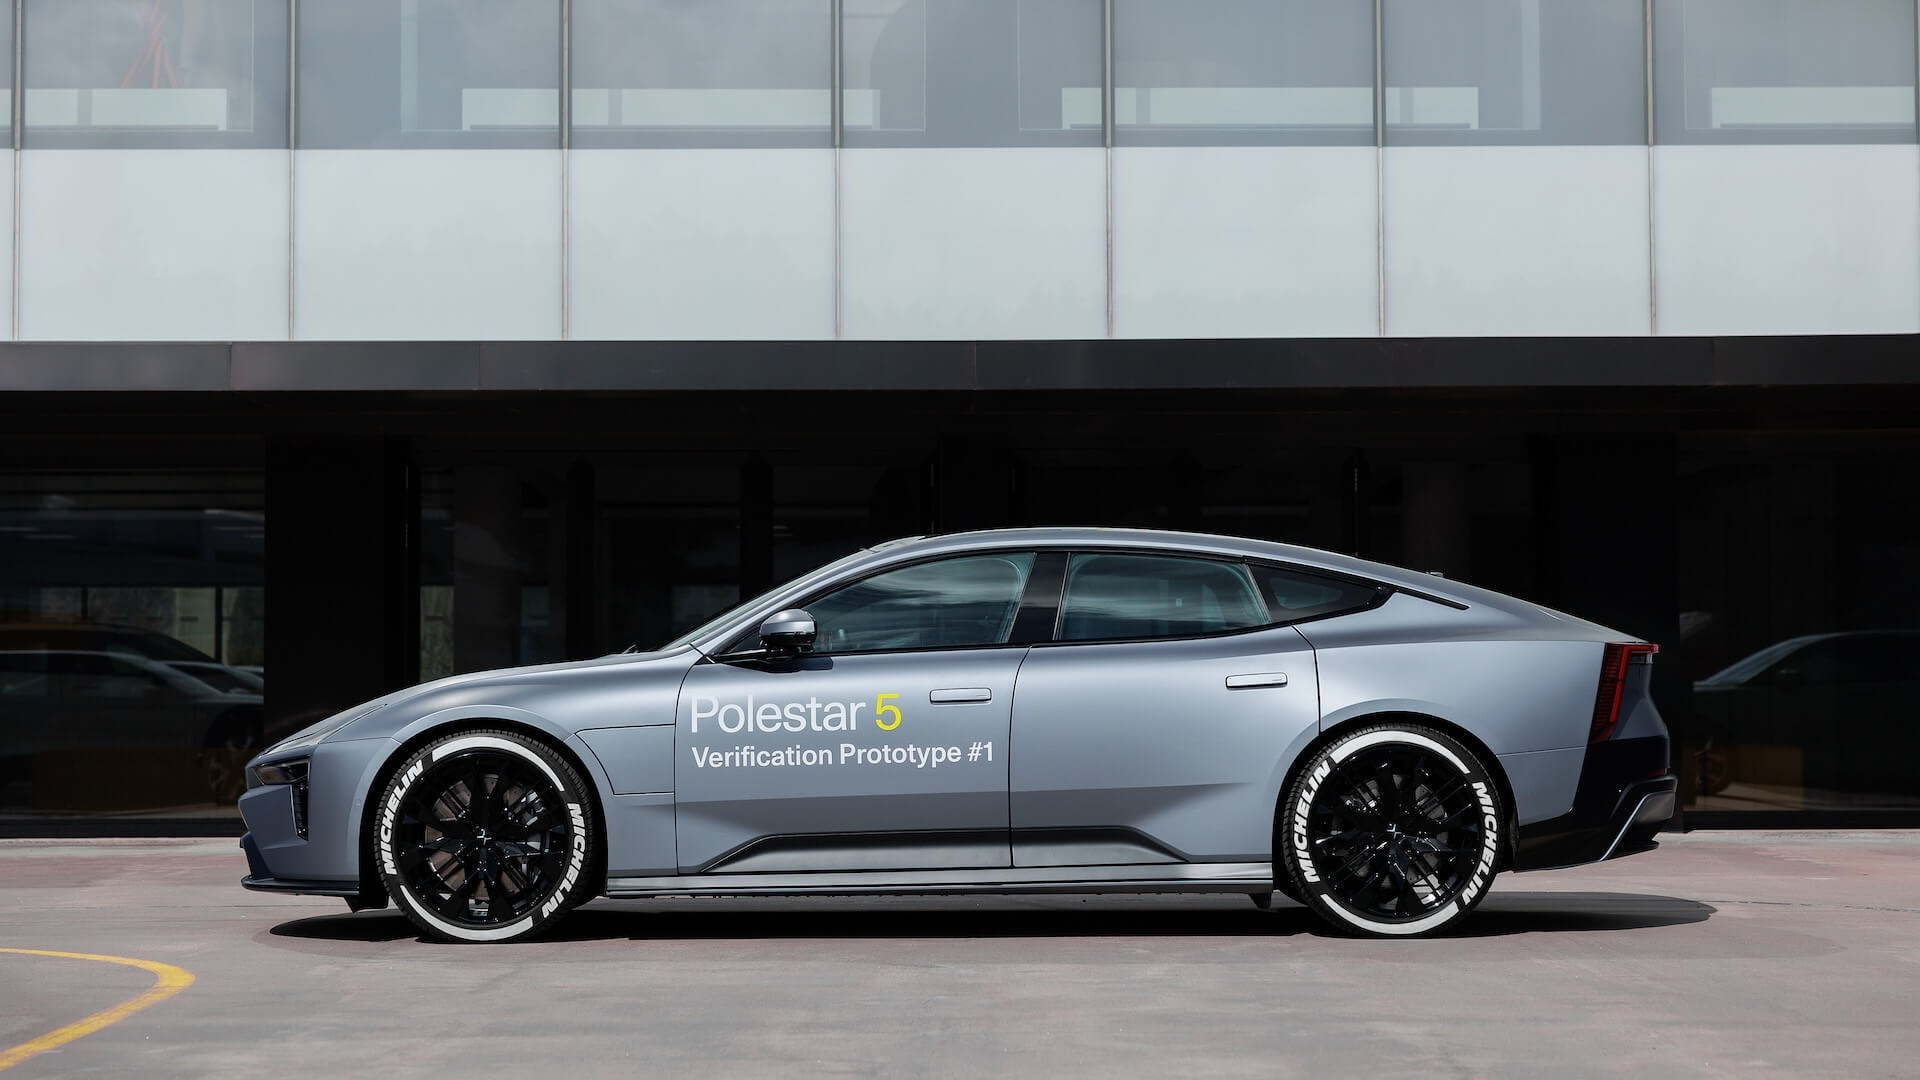 Swedish Polestar electric cars will get super-fast 10-minute charging